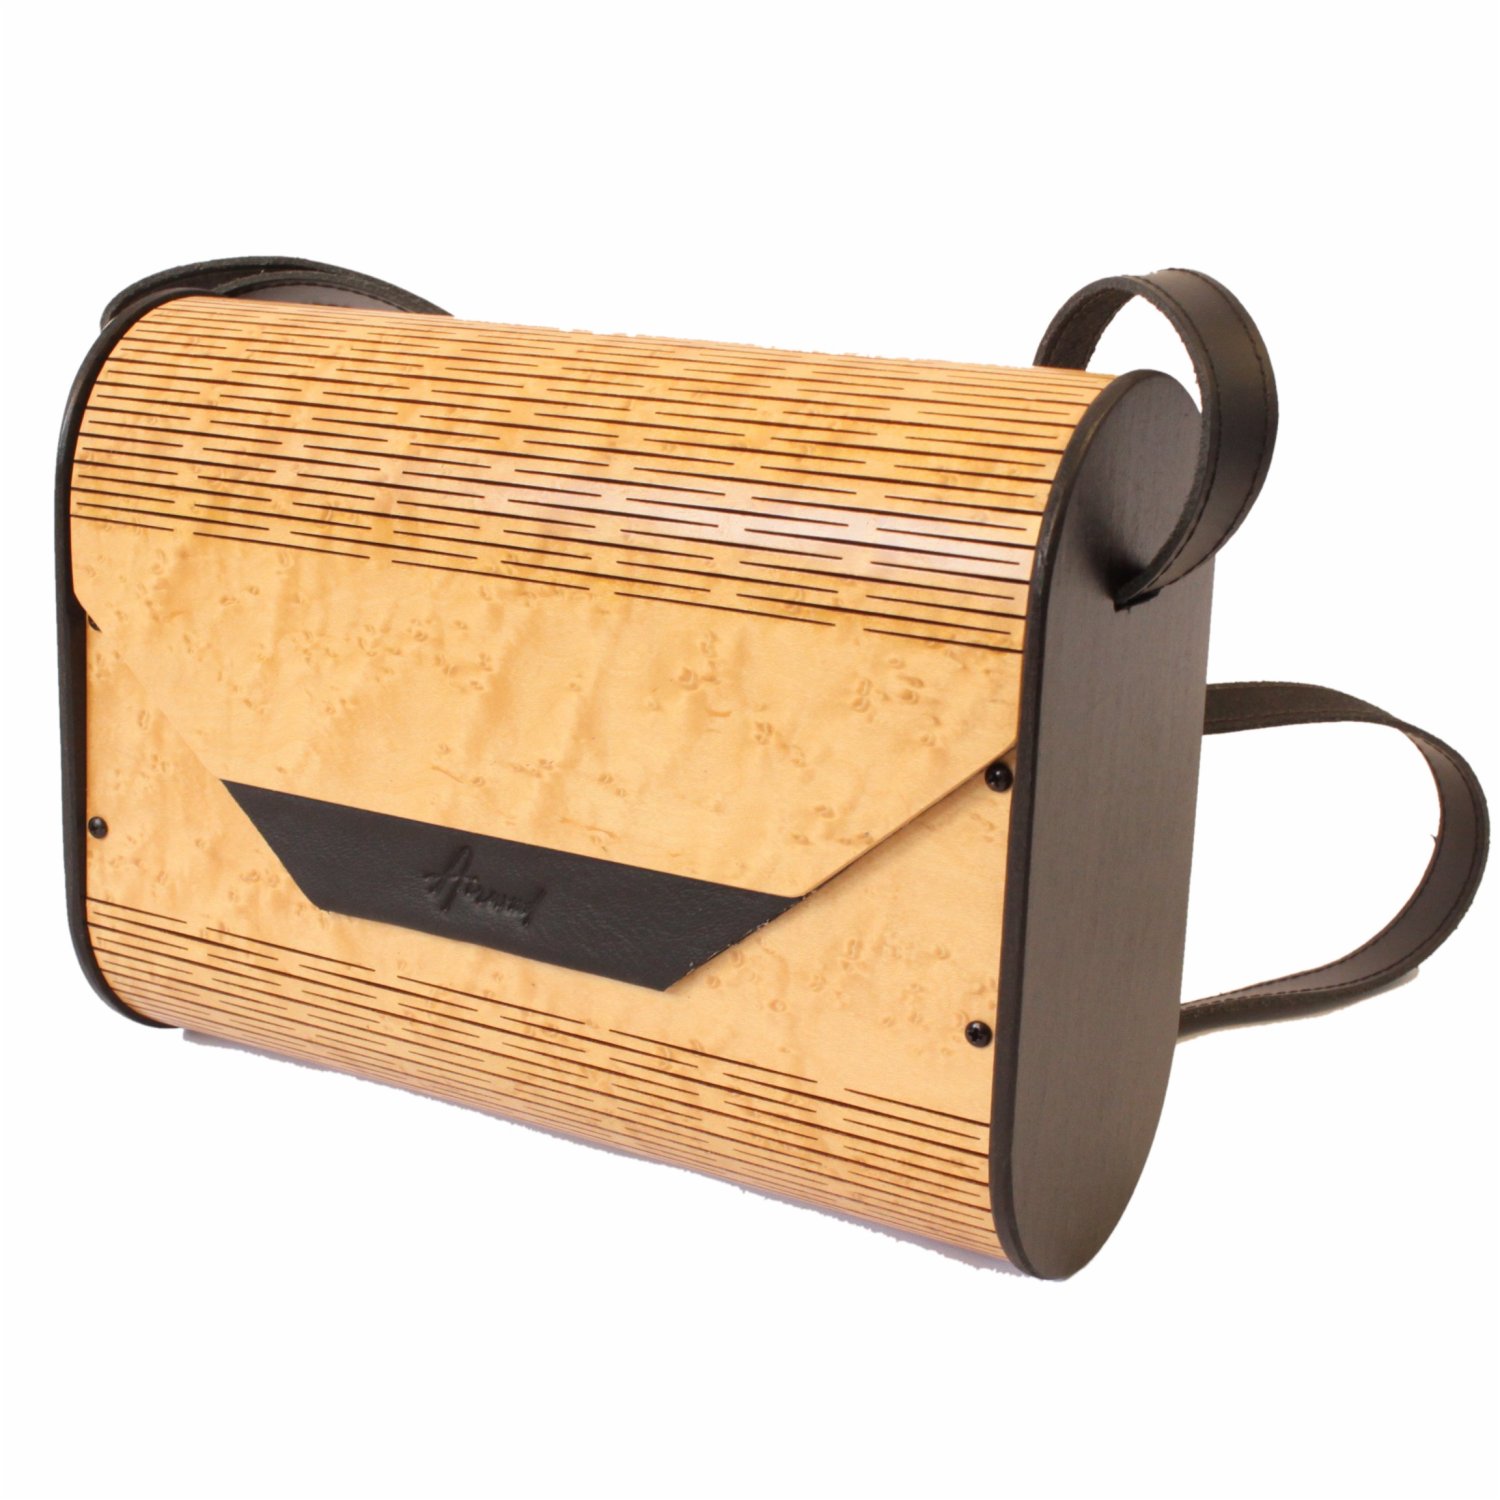 High quality wooden handbag made of birds eye maple